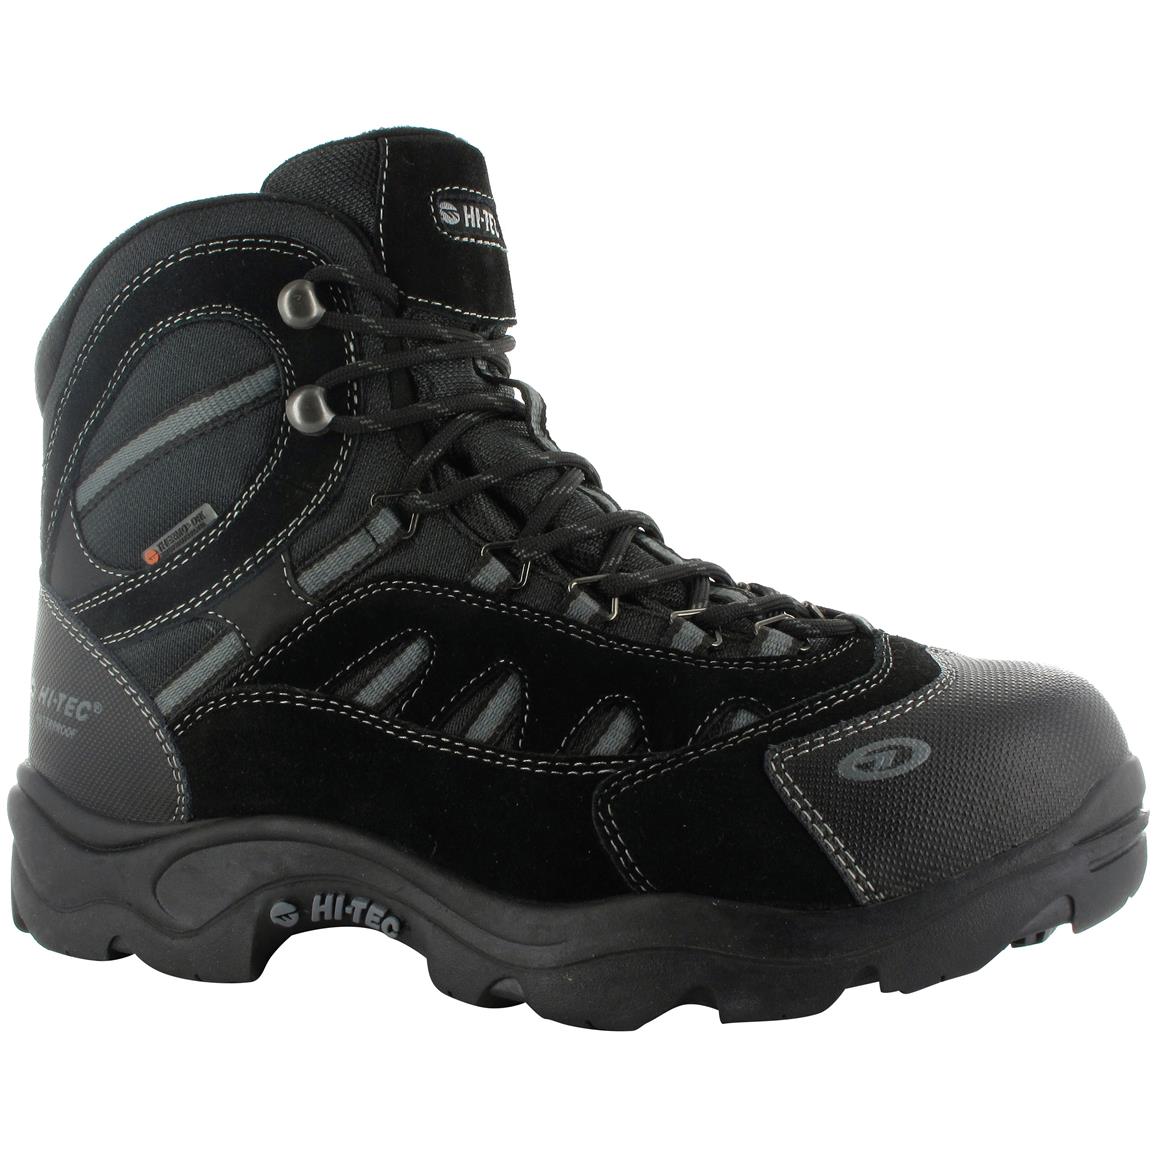 Merrell Men's Pulsate Mid Waterproof Hiking Boots, Realtree Xtra Green ...